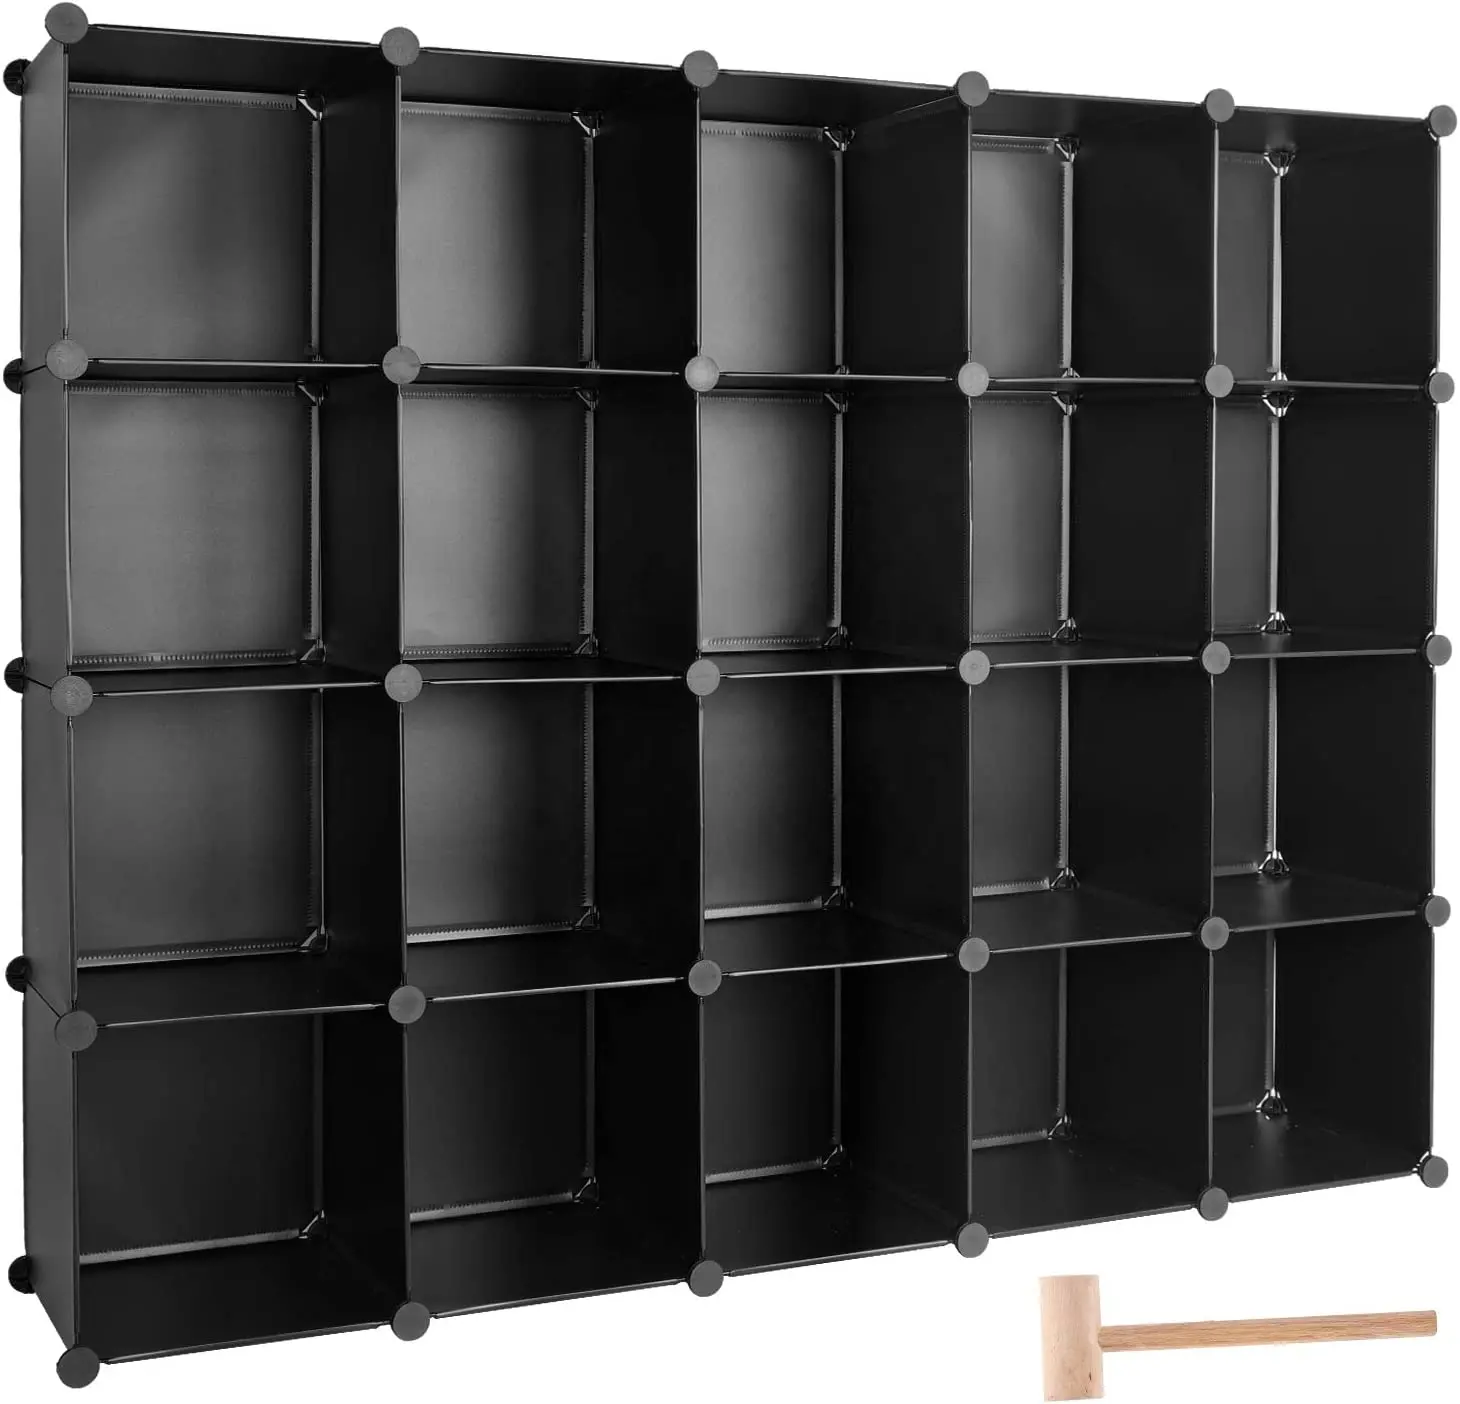 Cheep Furniture Manufacturer Black Kids Cabinet Fashionable Plastic Storage Rack